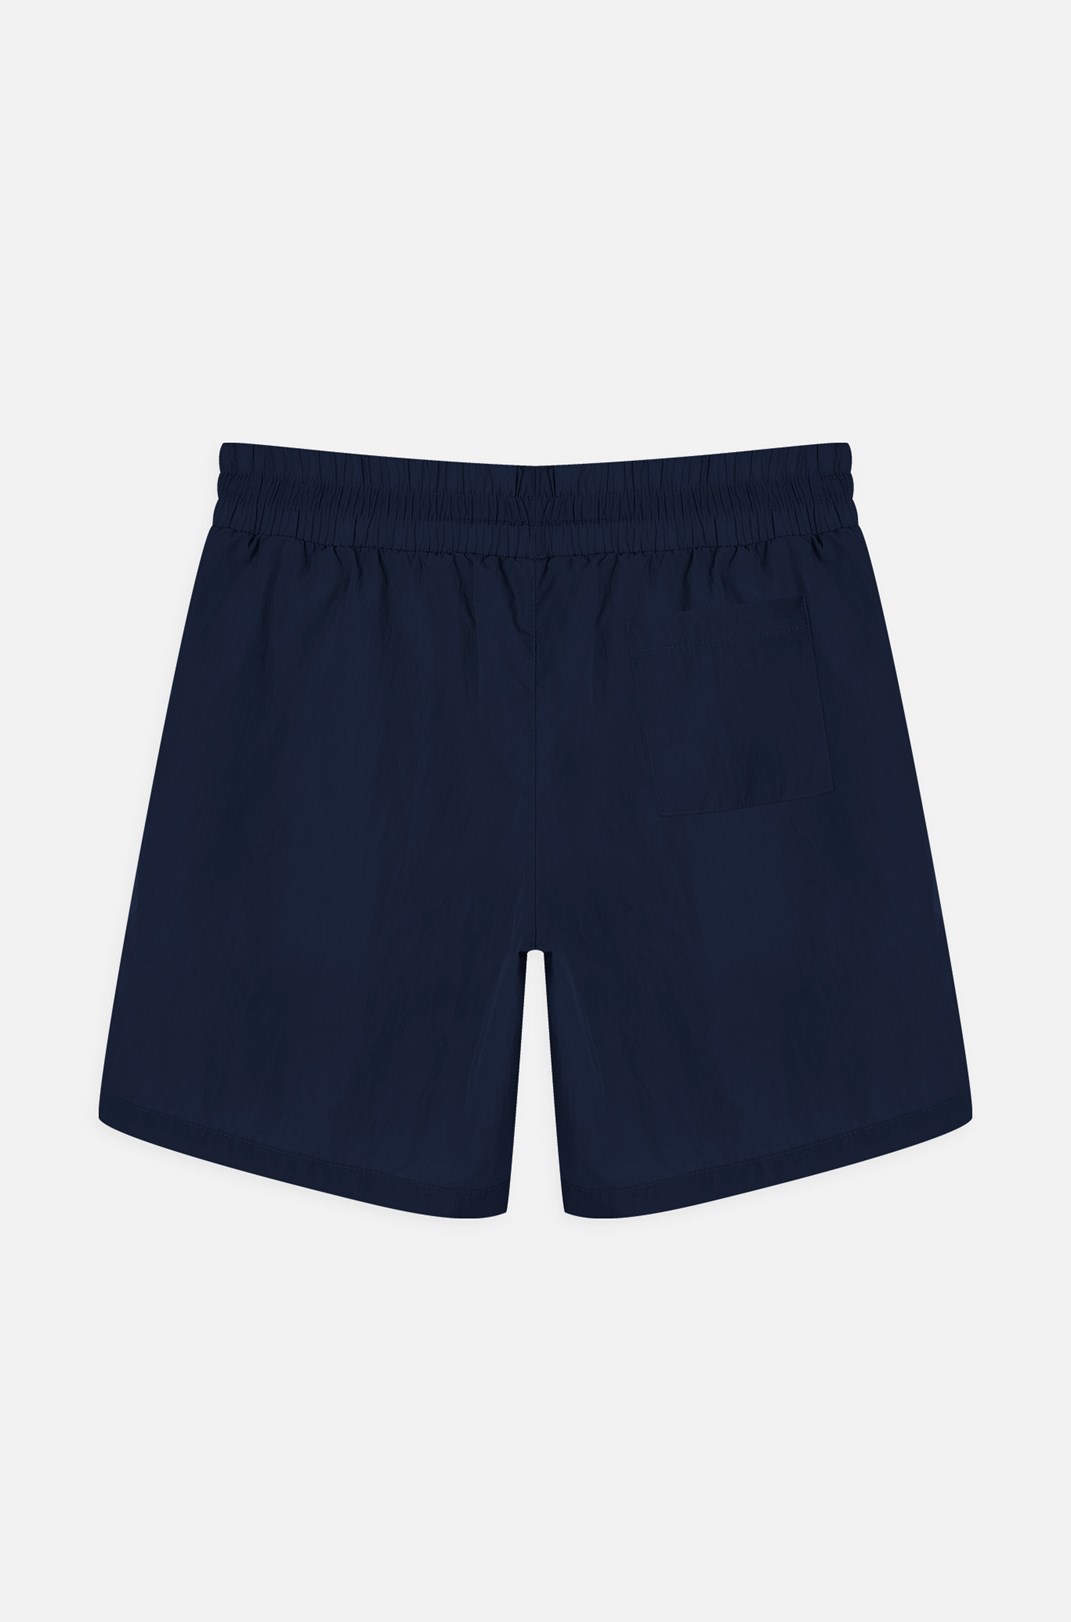 Shorts Approve Basic Azul